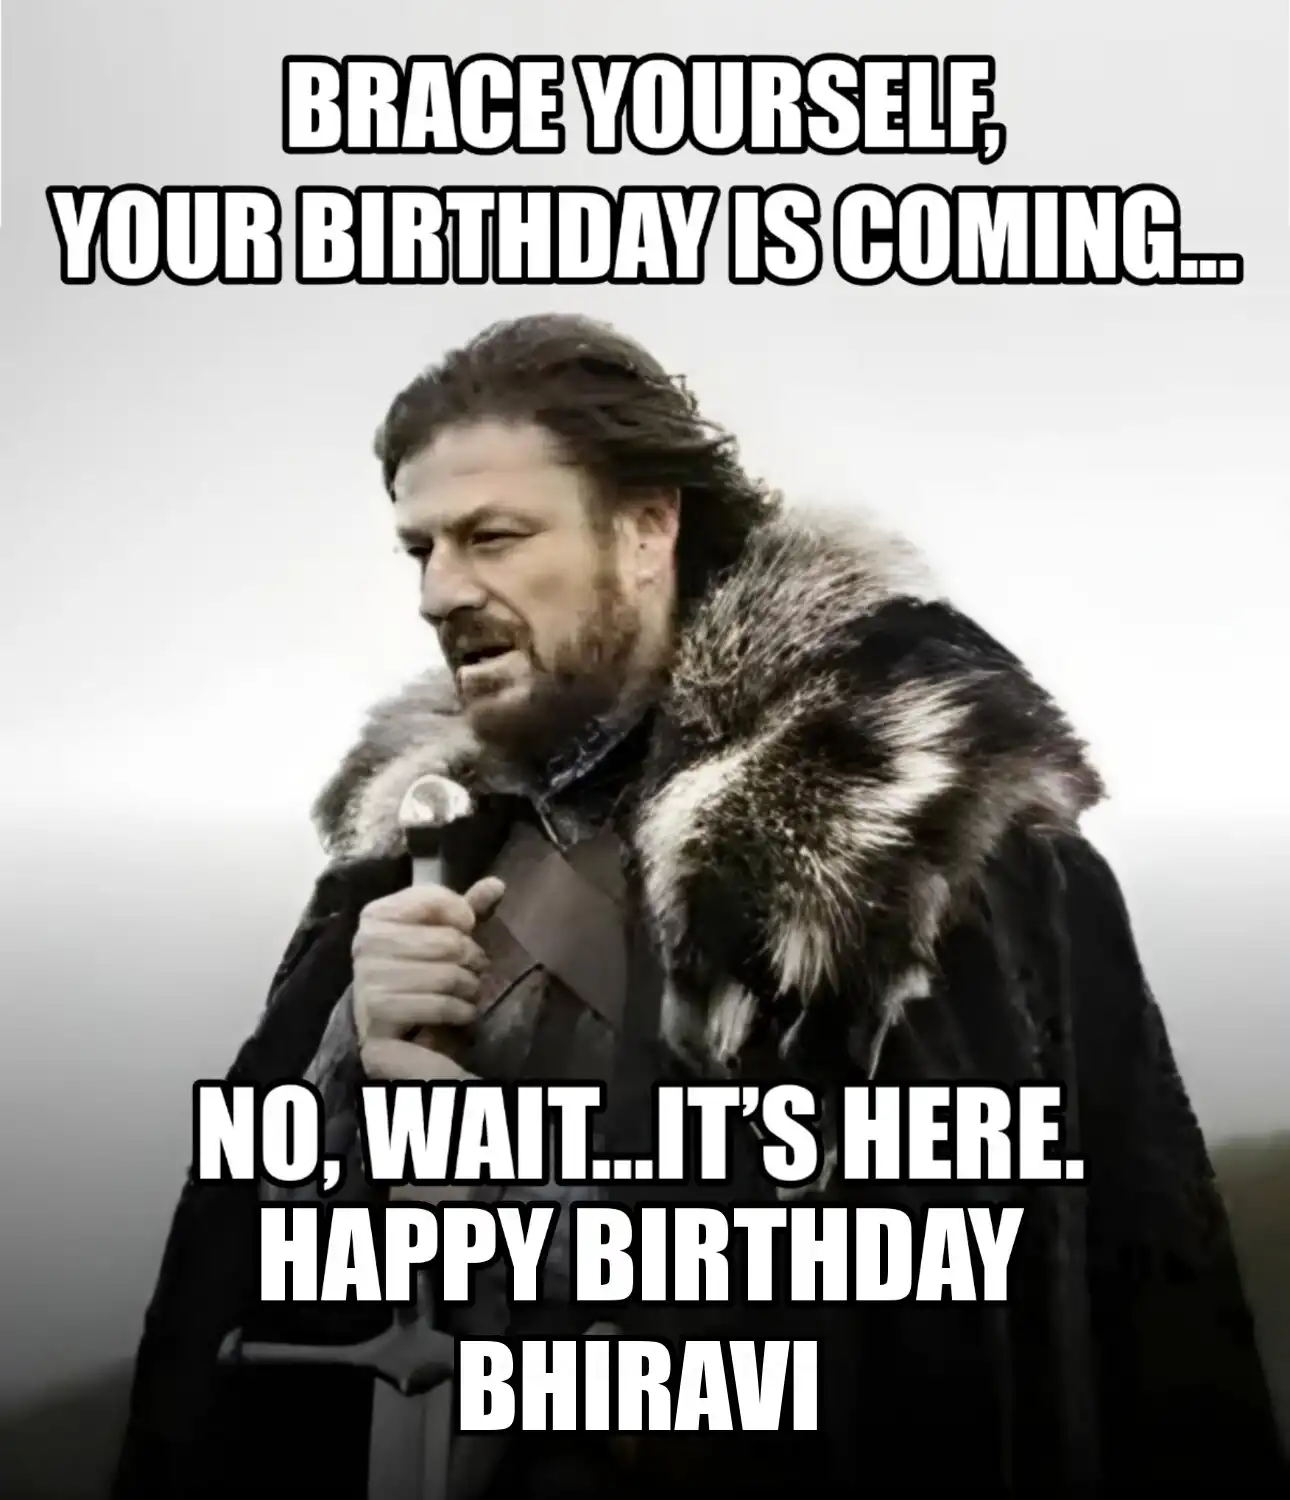 Happy Birthday Bhiravi Brace Yourself Your Birthday Is Coming Meme